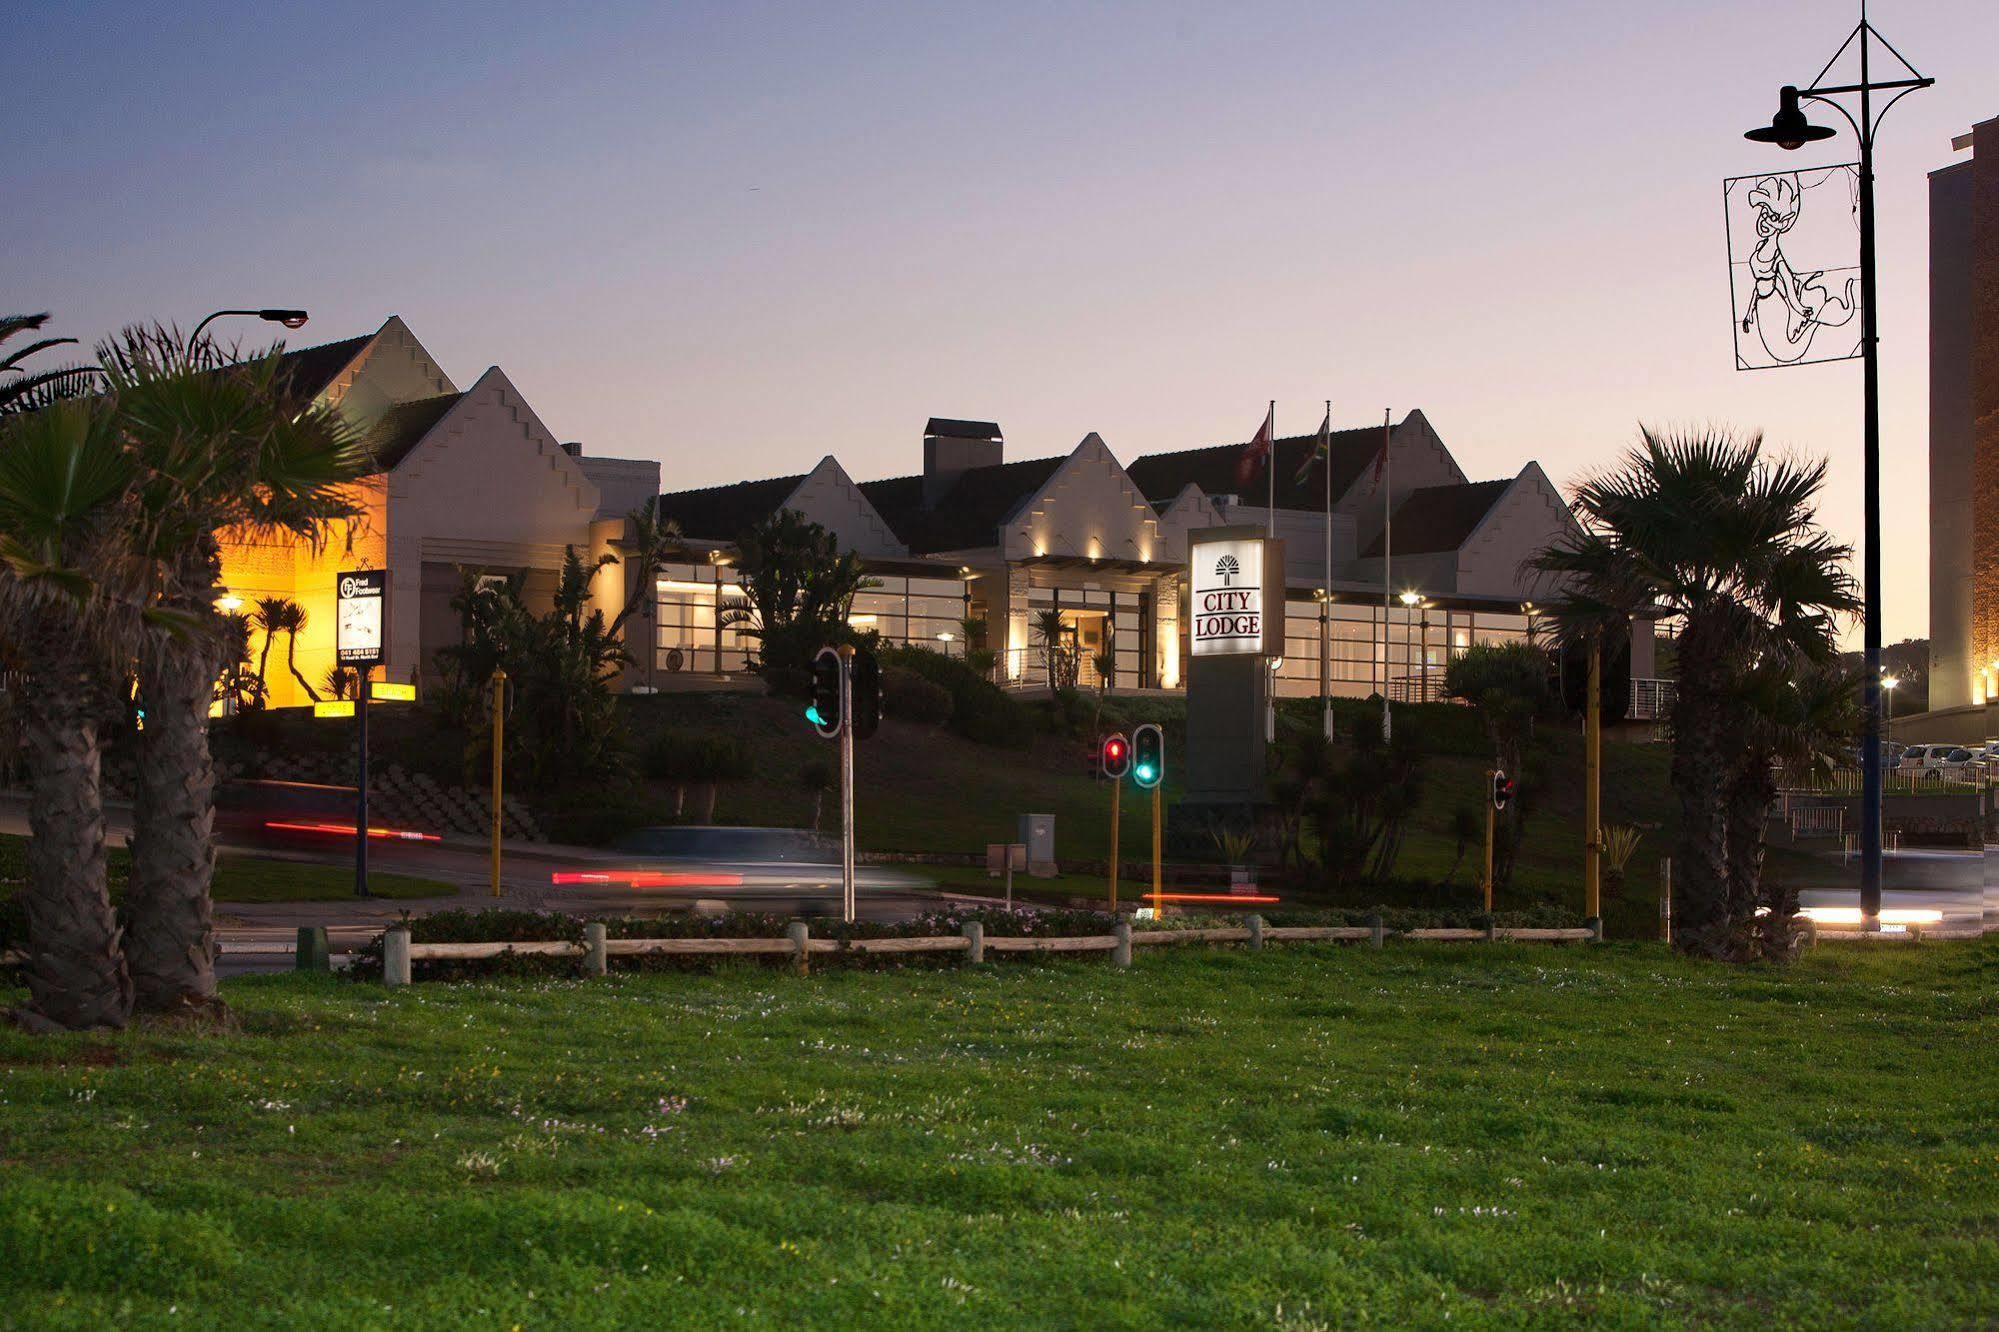 City Lodge Hotel Gqeberha Port Elizabeth Exterior photo